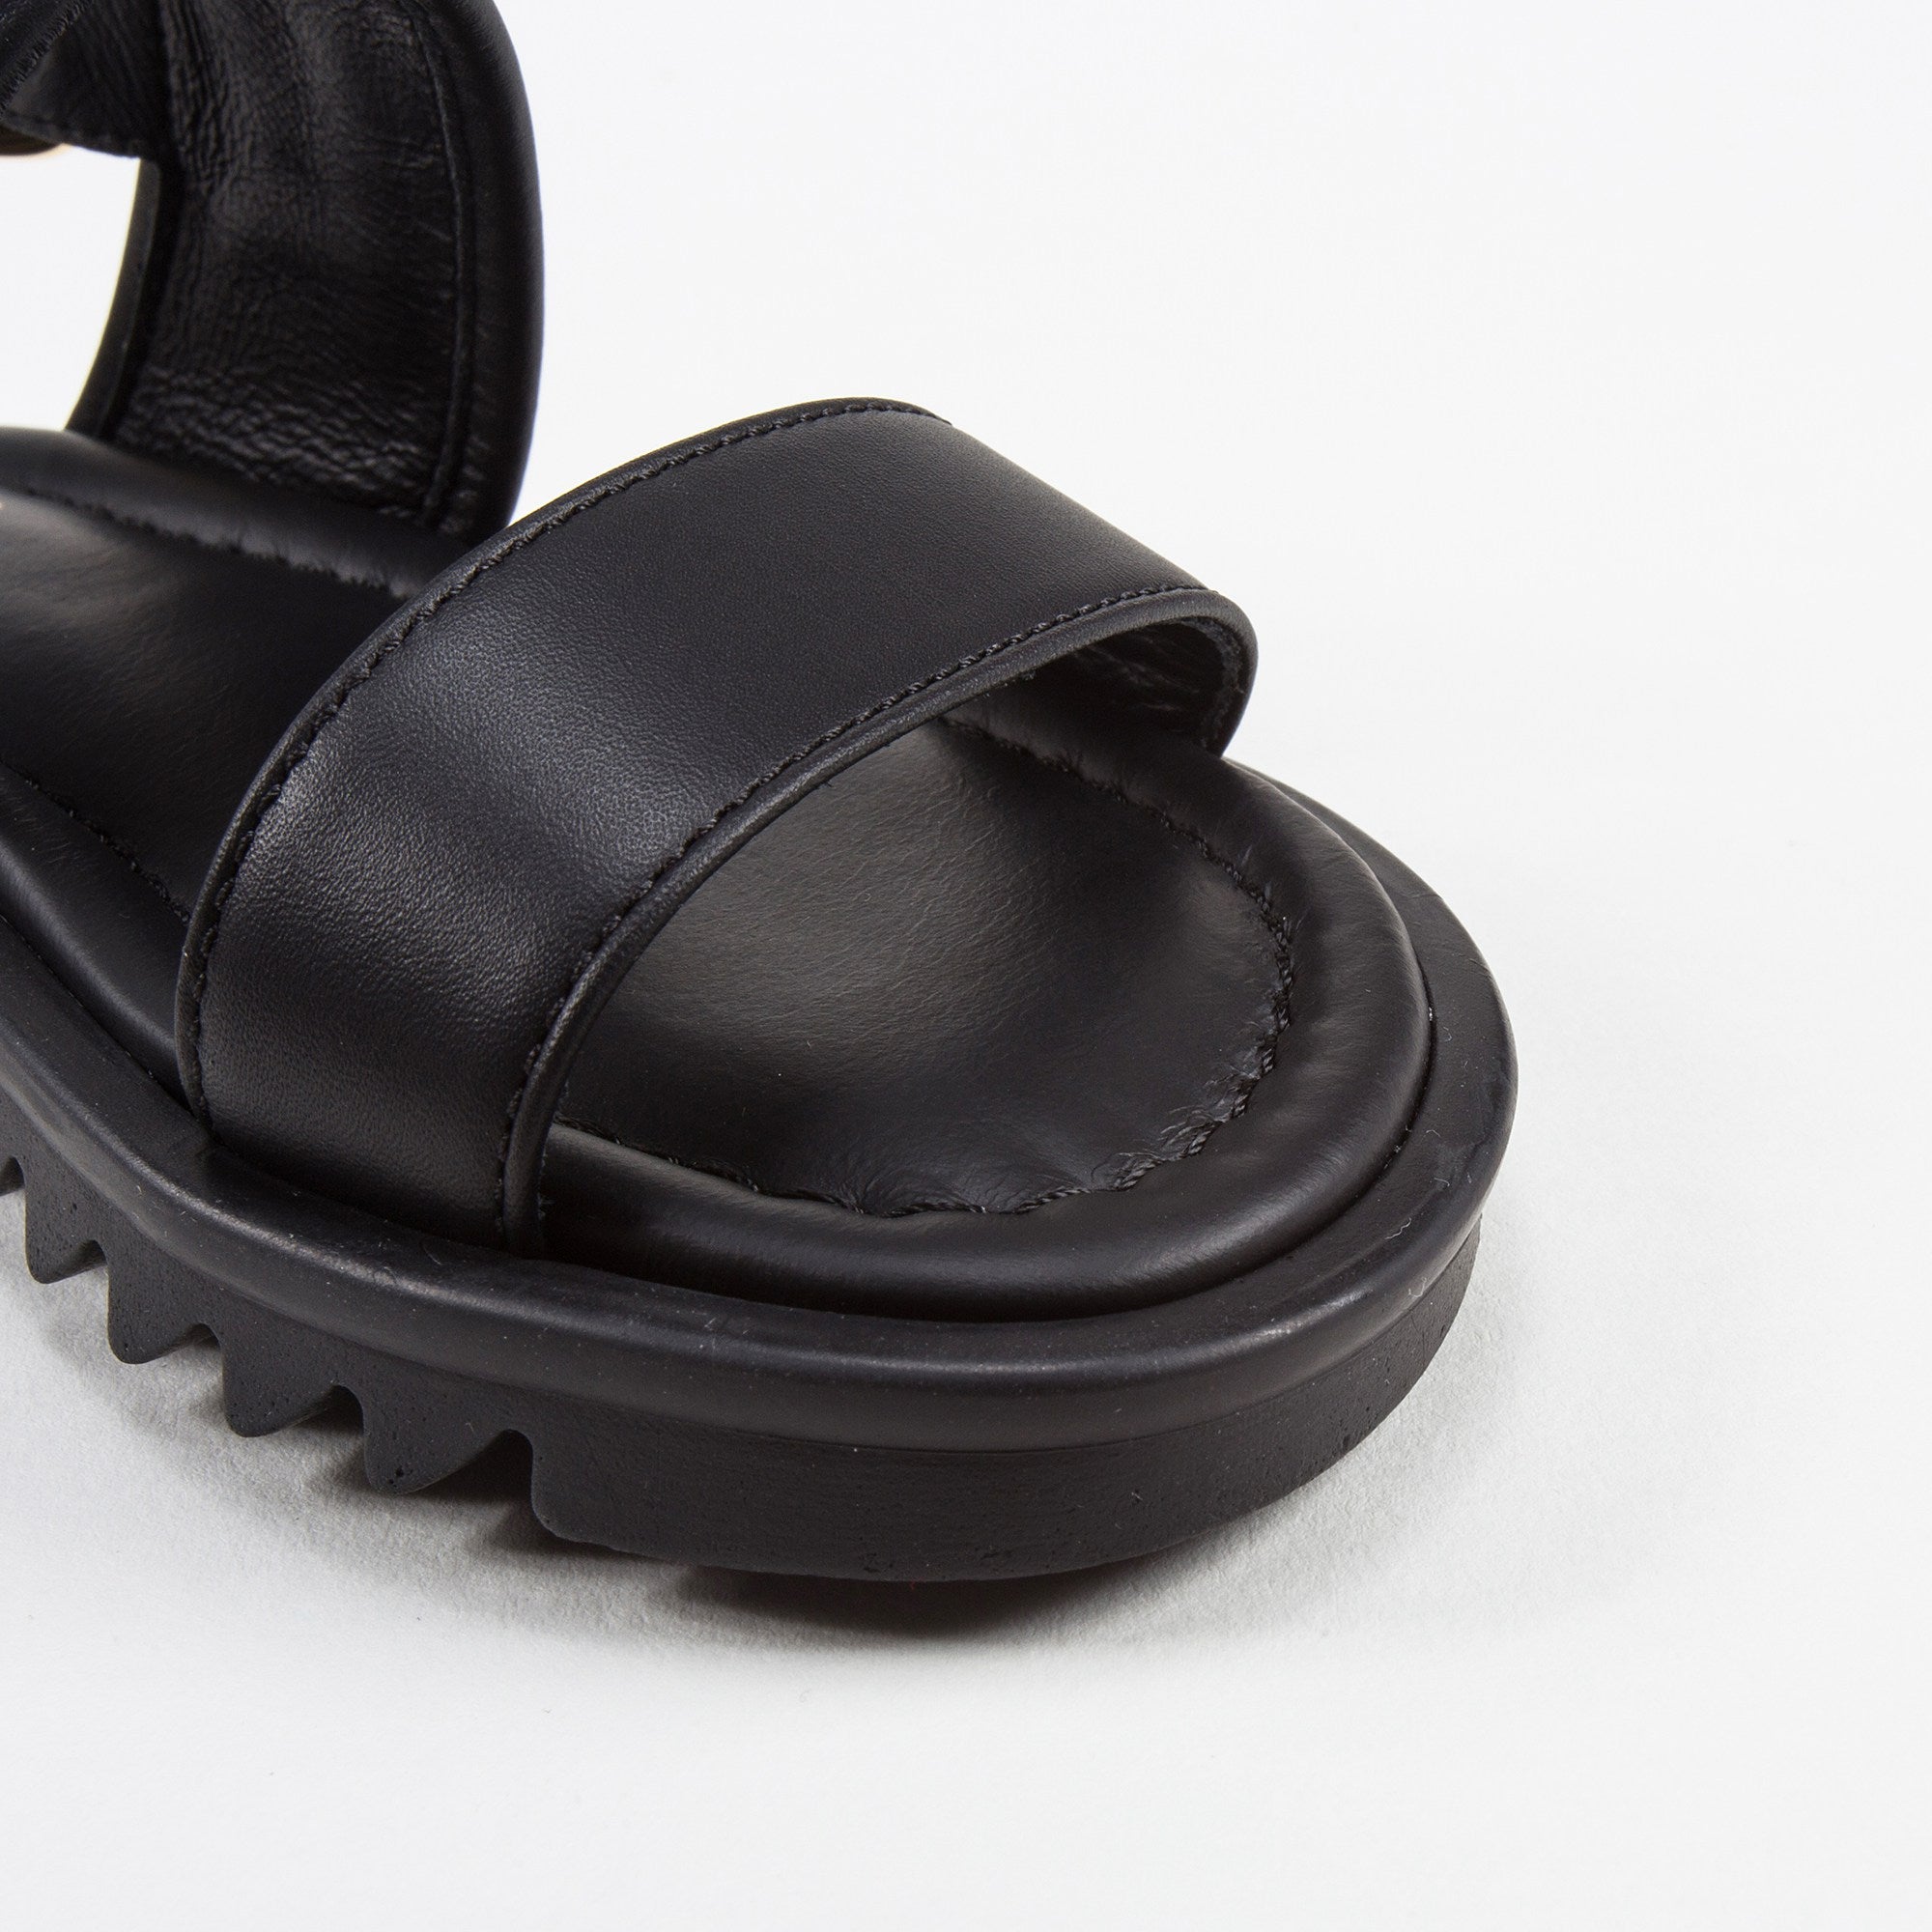 Girls & Boys Black Calf Leather Sandal